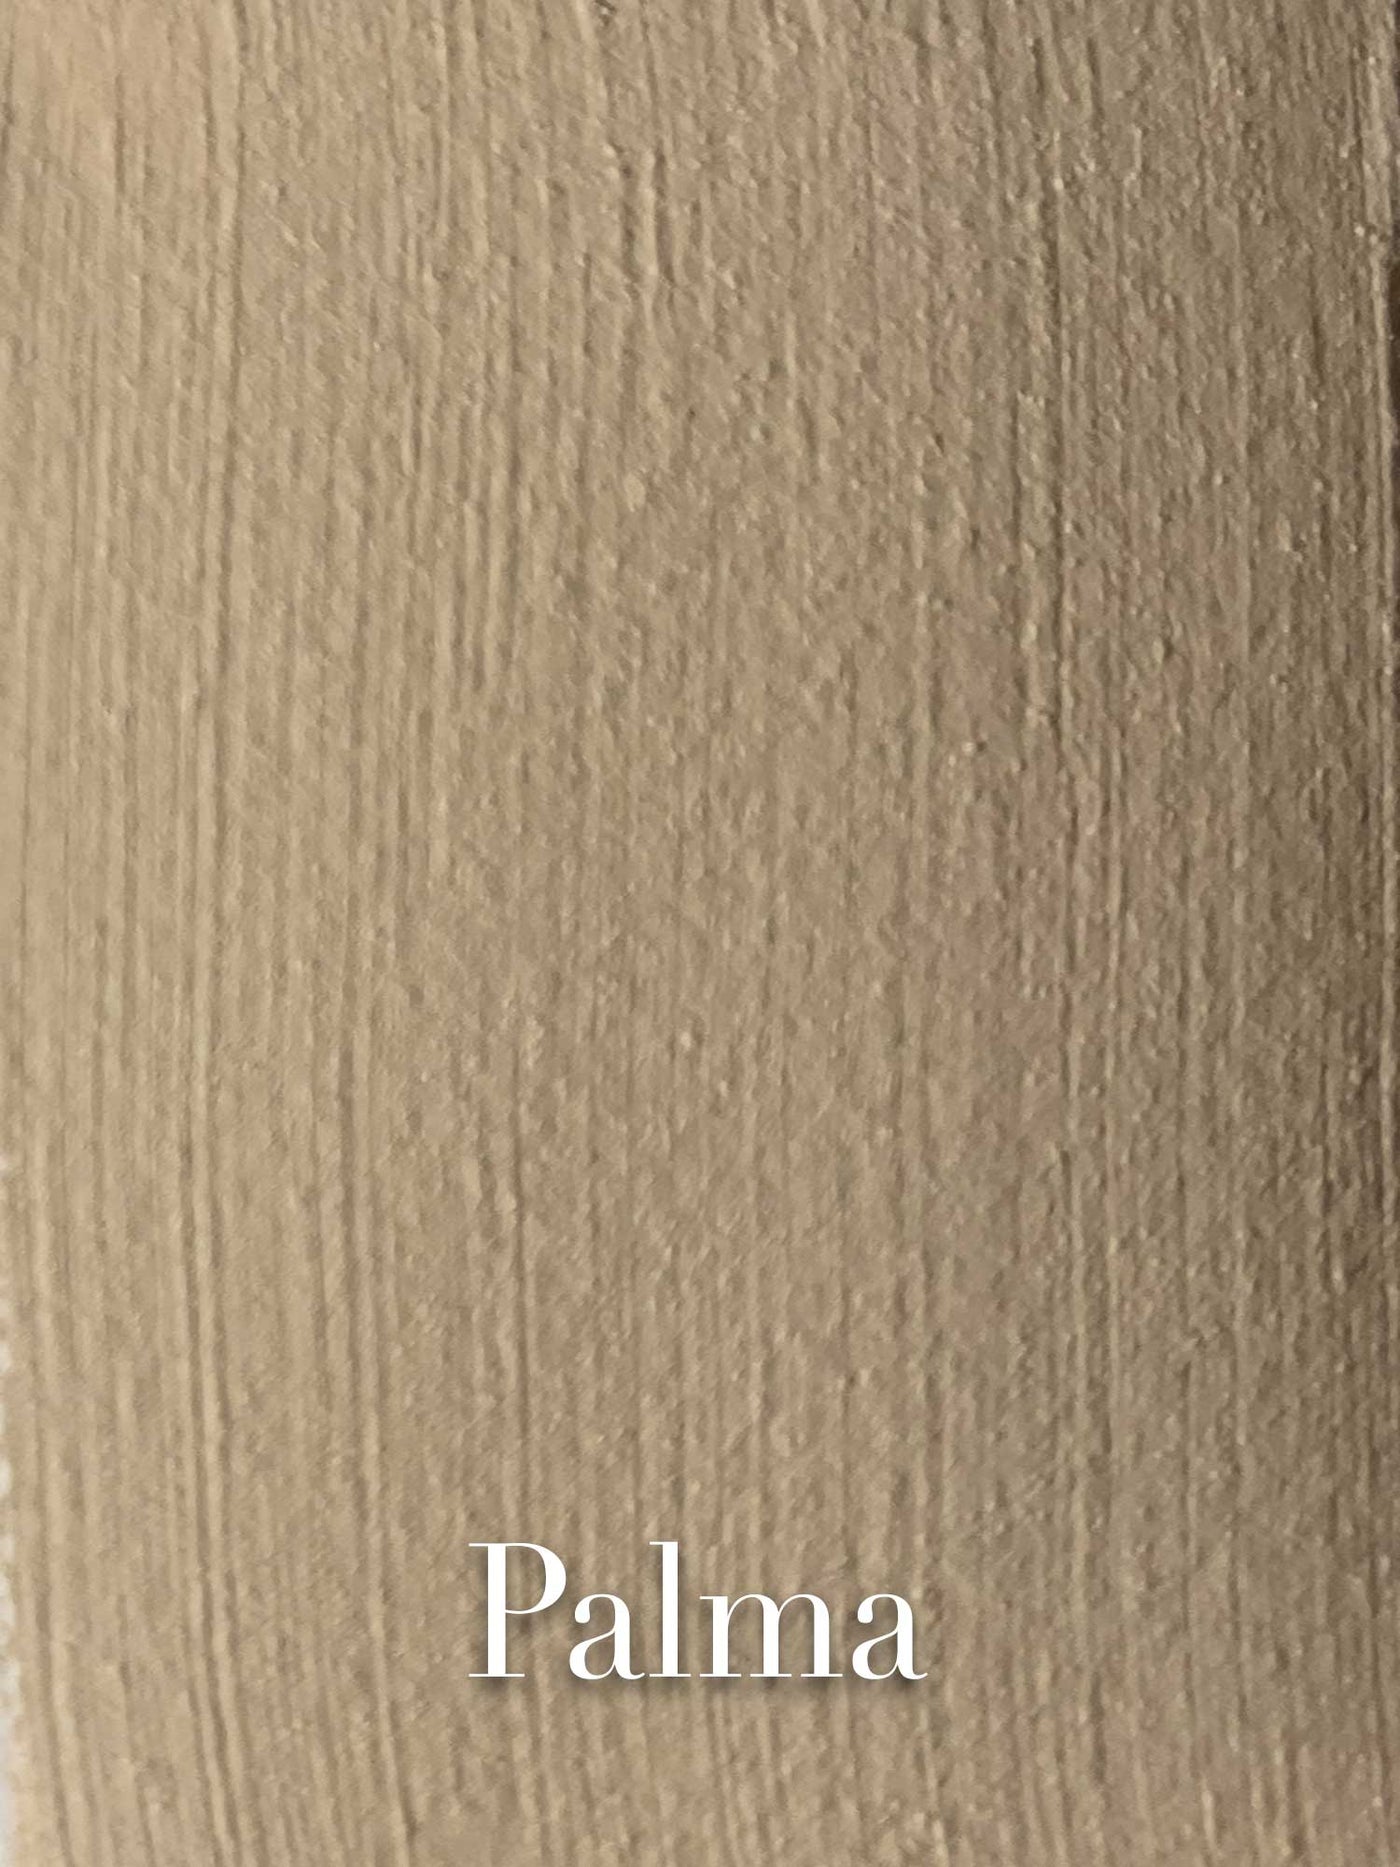 Palma  /discontinued